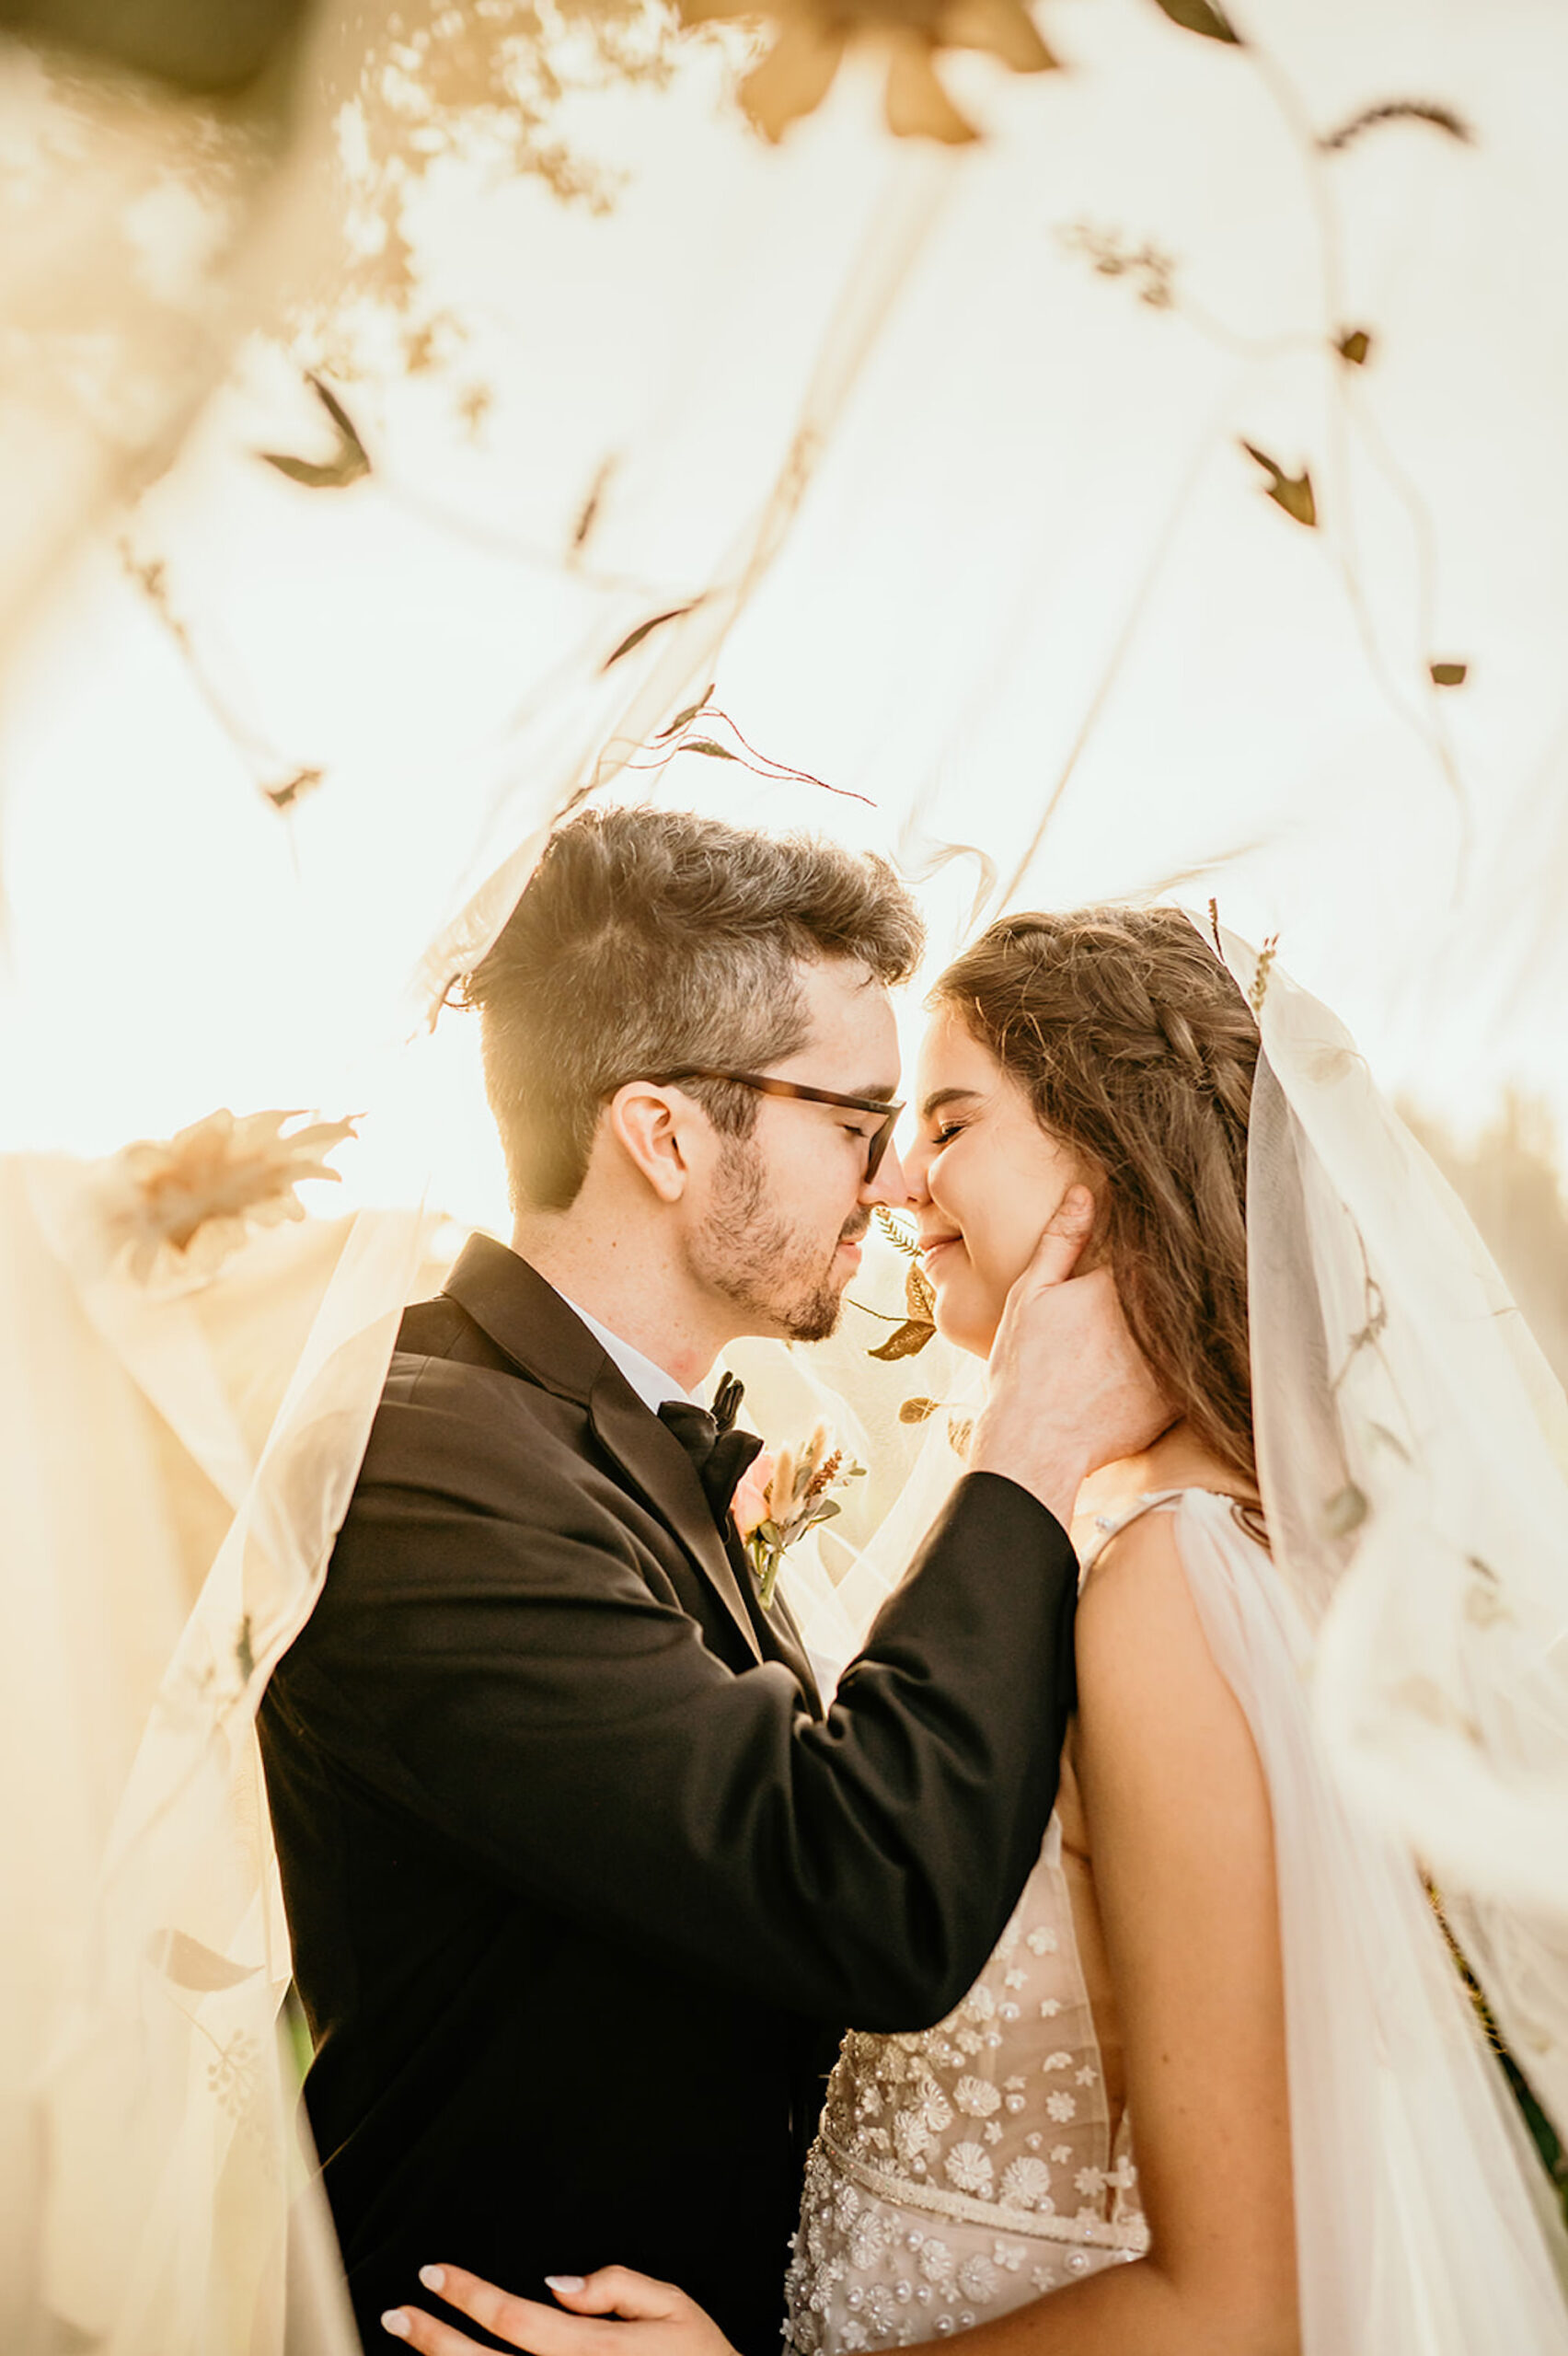 Romantic Bride and Groom Veil Wedding Portrait | Tampa Bay Planner Eventfull Weddings